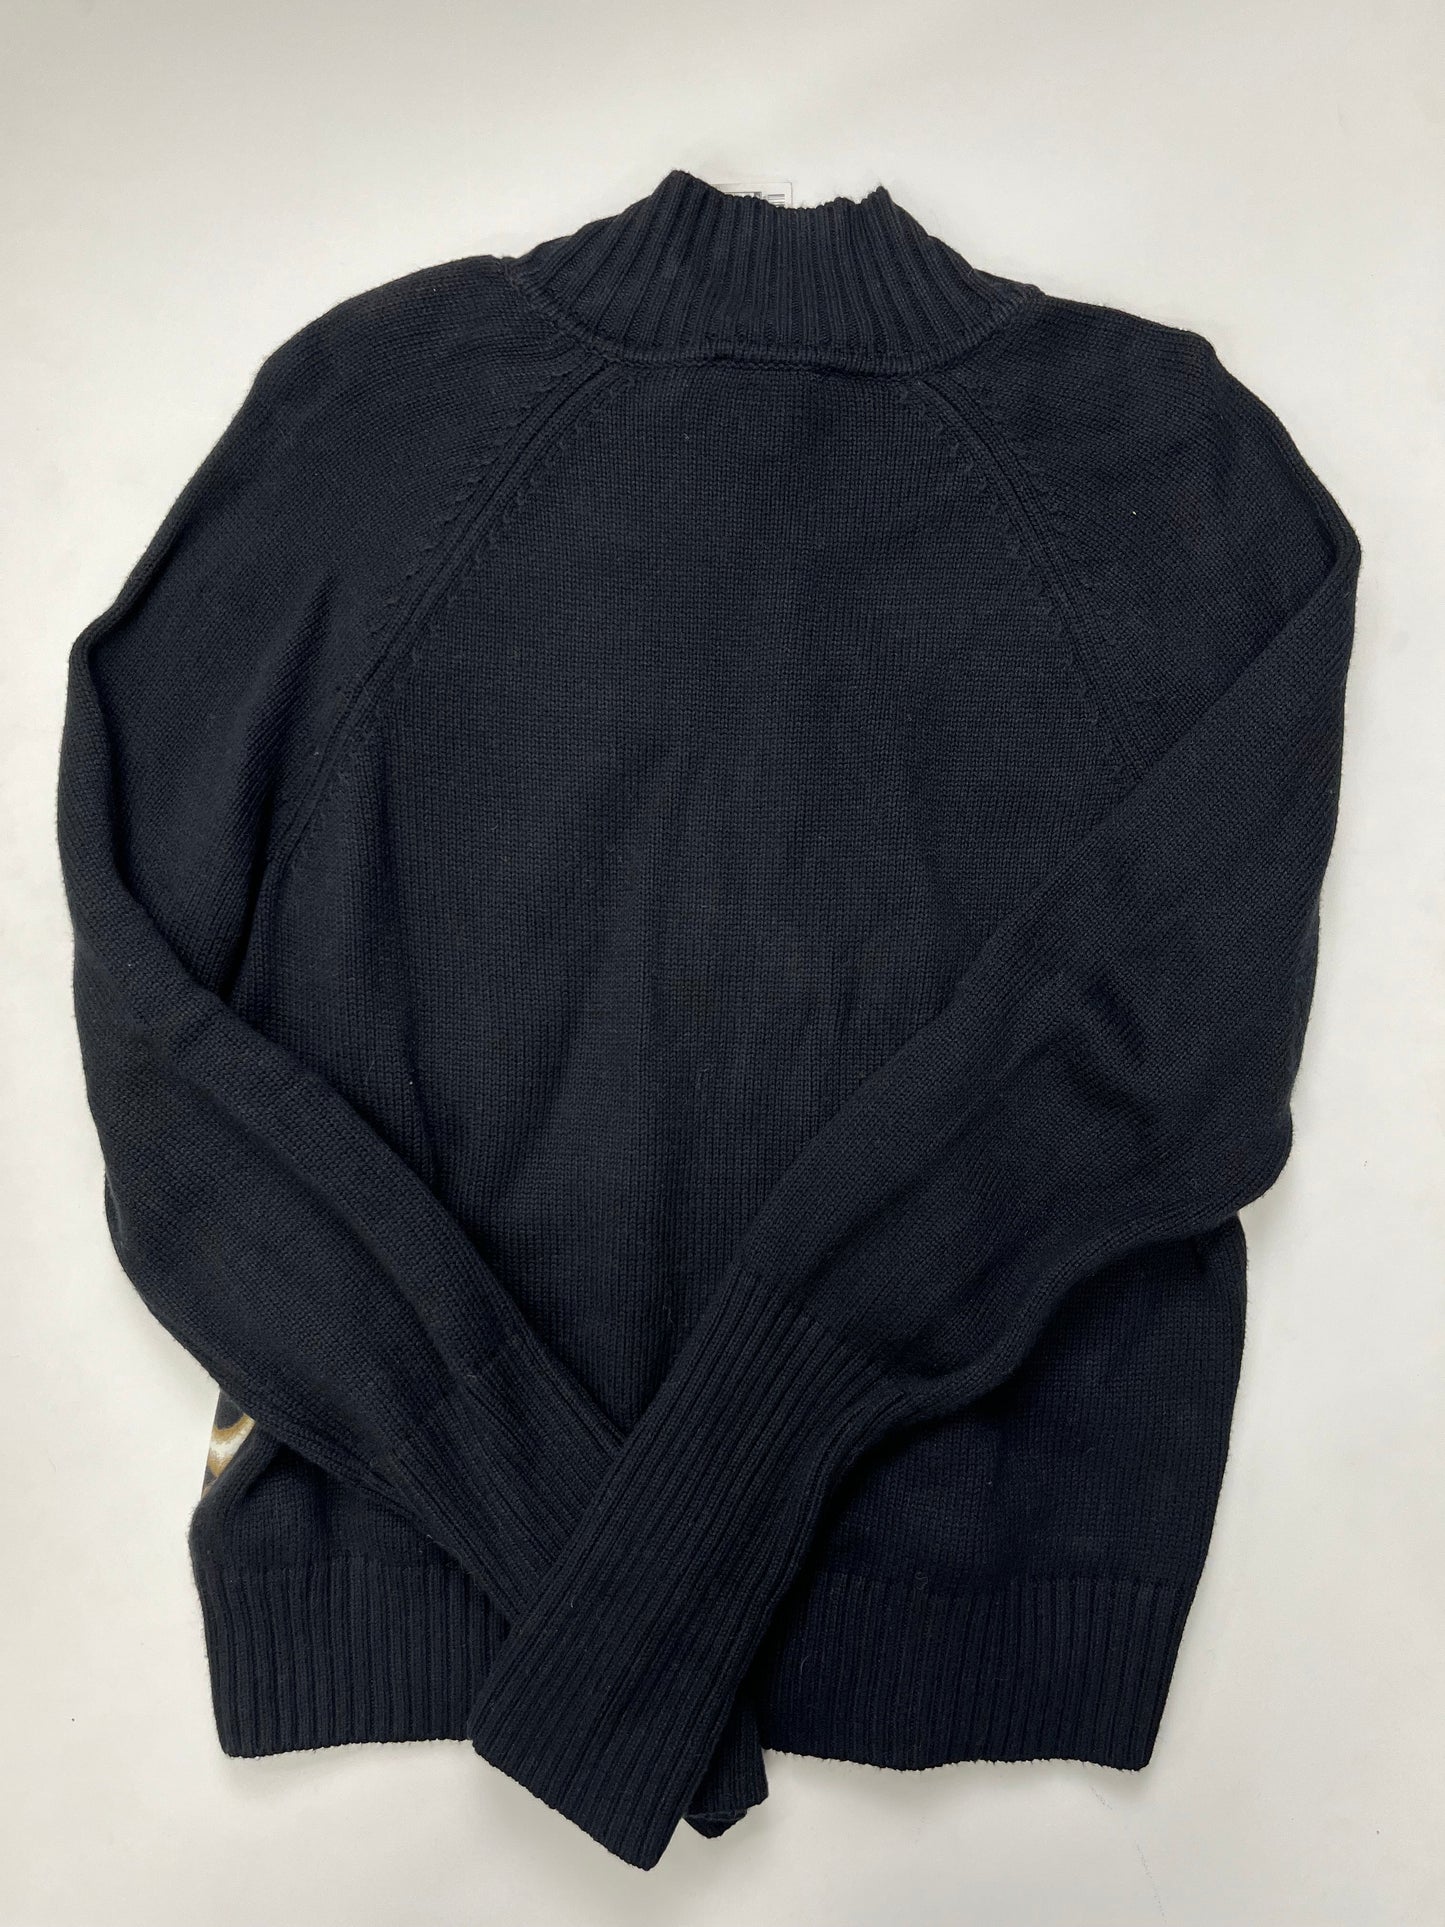 Sweater Heavyweight By Adrienne Vittadini  Size: M